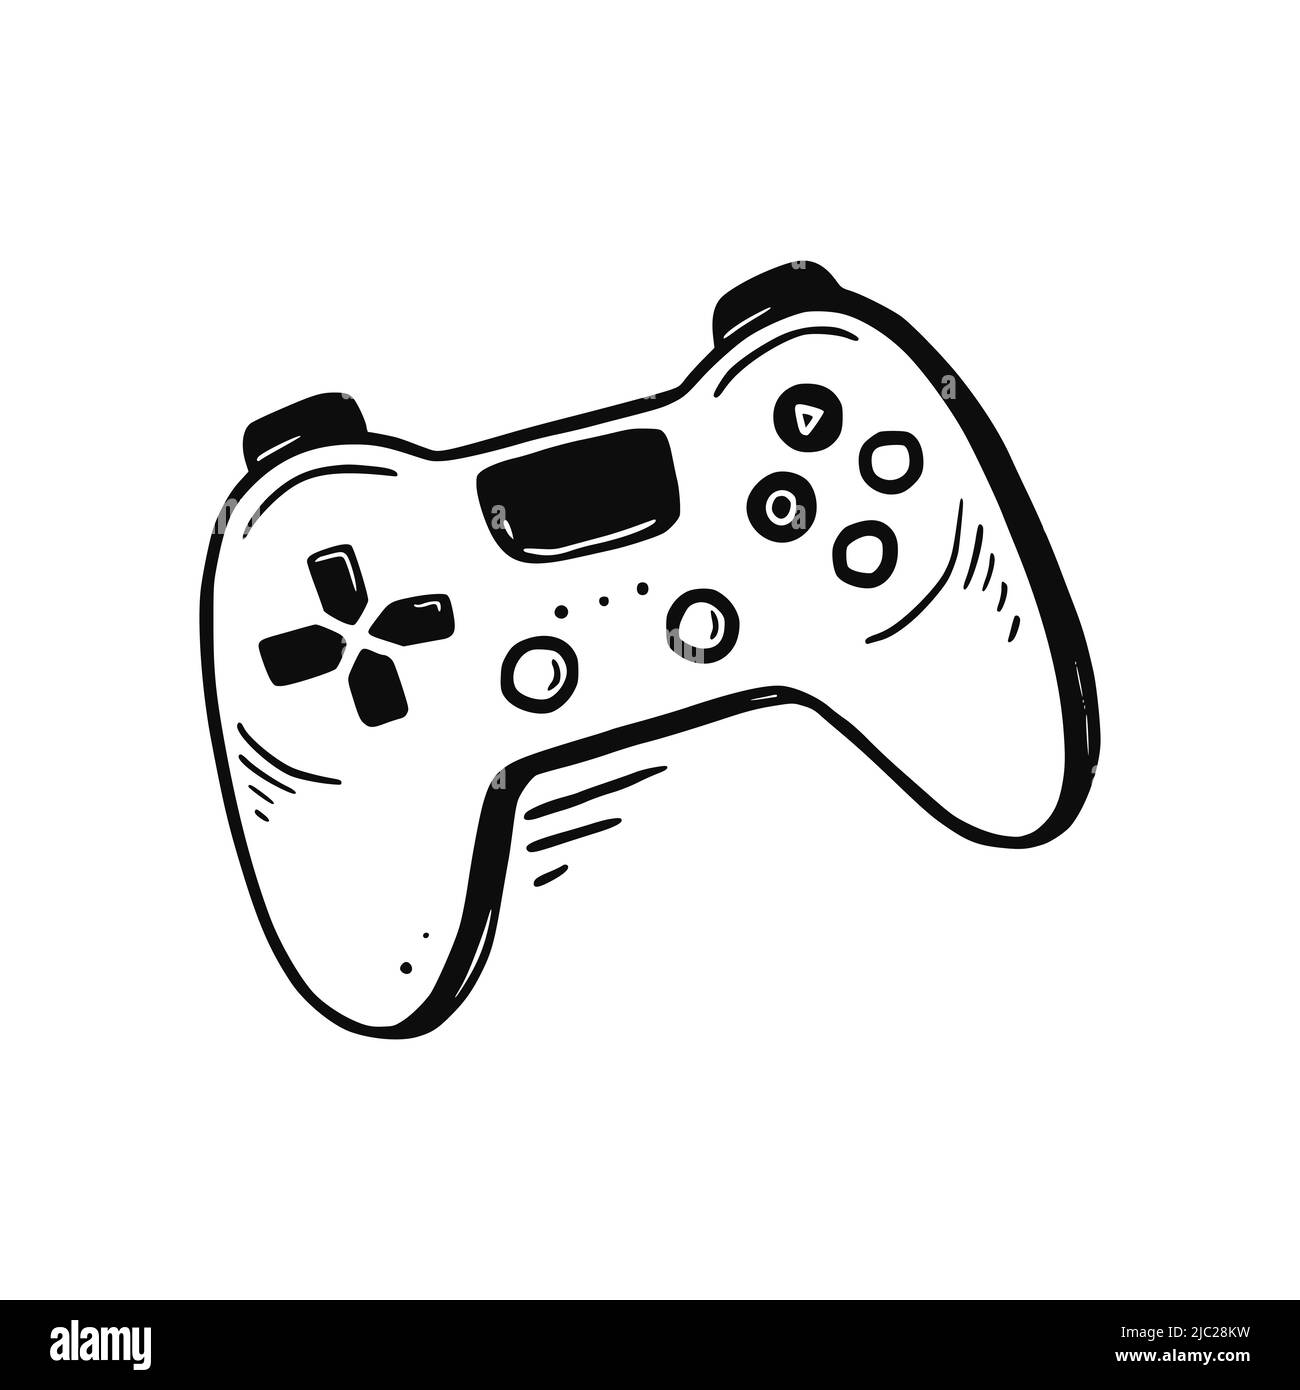 Video game joystick hand drawn doodle control. Video gamer joystick controller element. Computer retro, arcade play concept. Vector illustration. Stock Vector